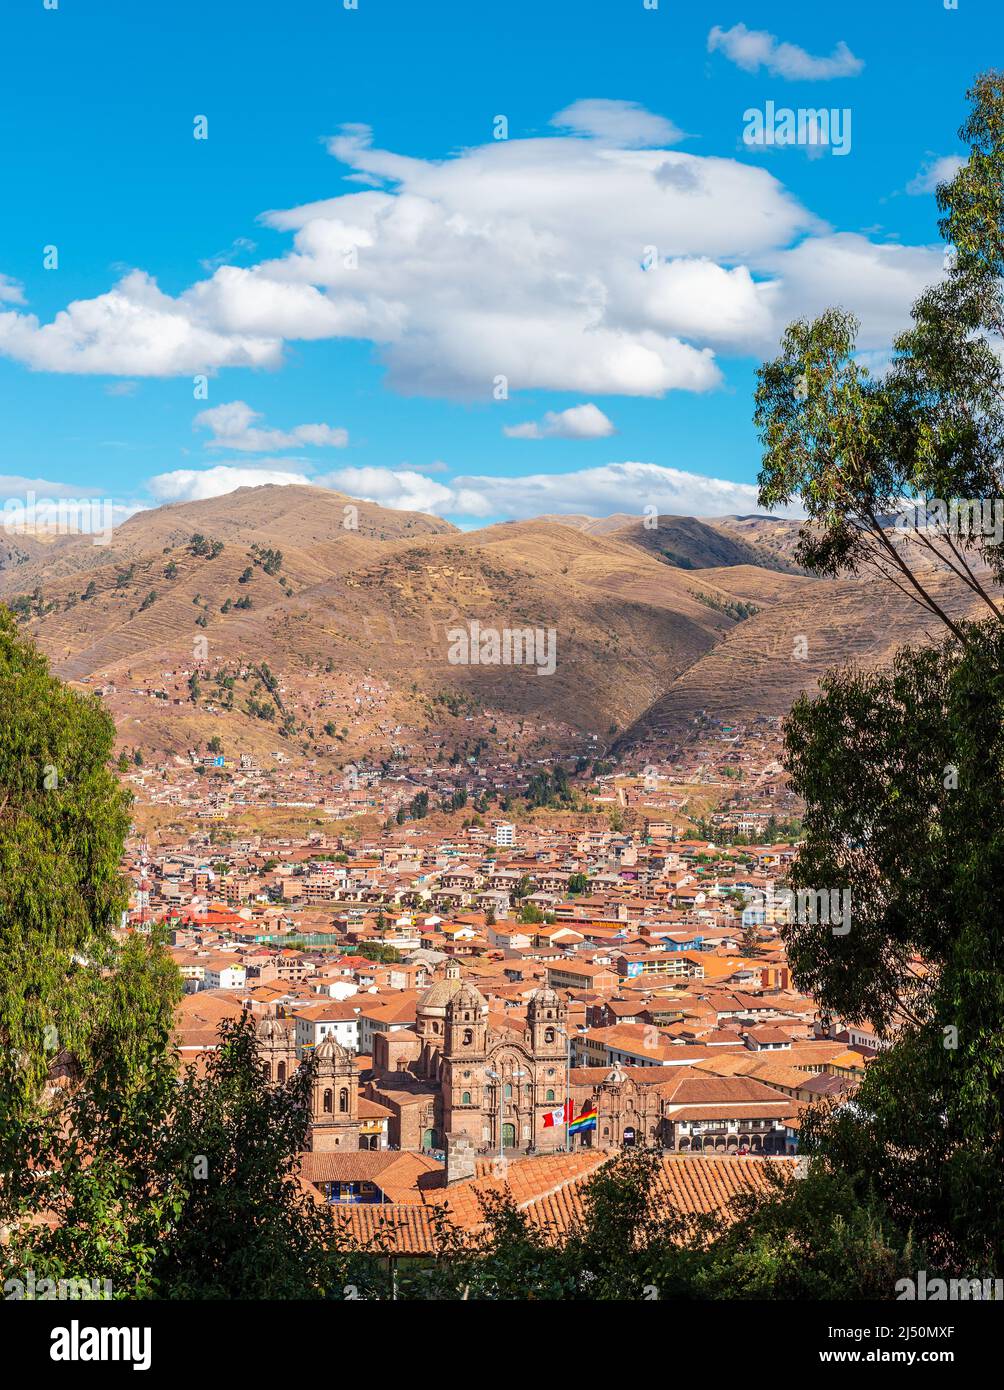 Vertikale Skyline der antiken inka-Hauptstadt Cusco mit der Kirche Compania de Jesus und dem Platz Plaza de Armas, Provinz Cusco, Peru. Stockfoto